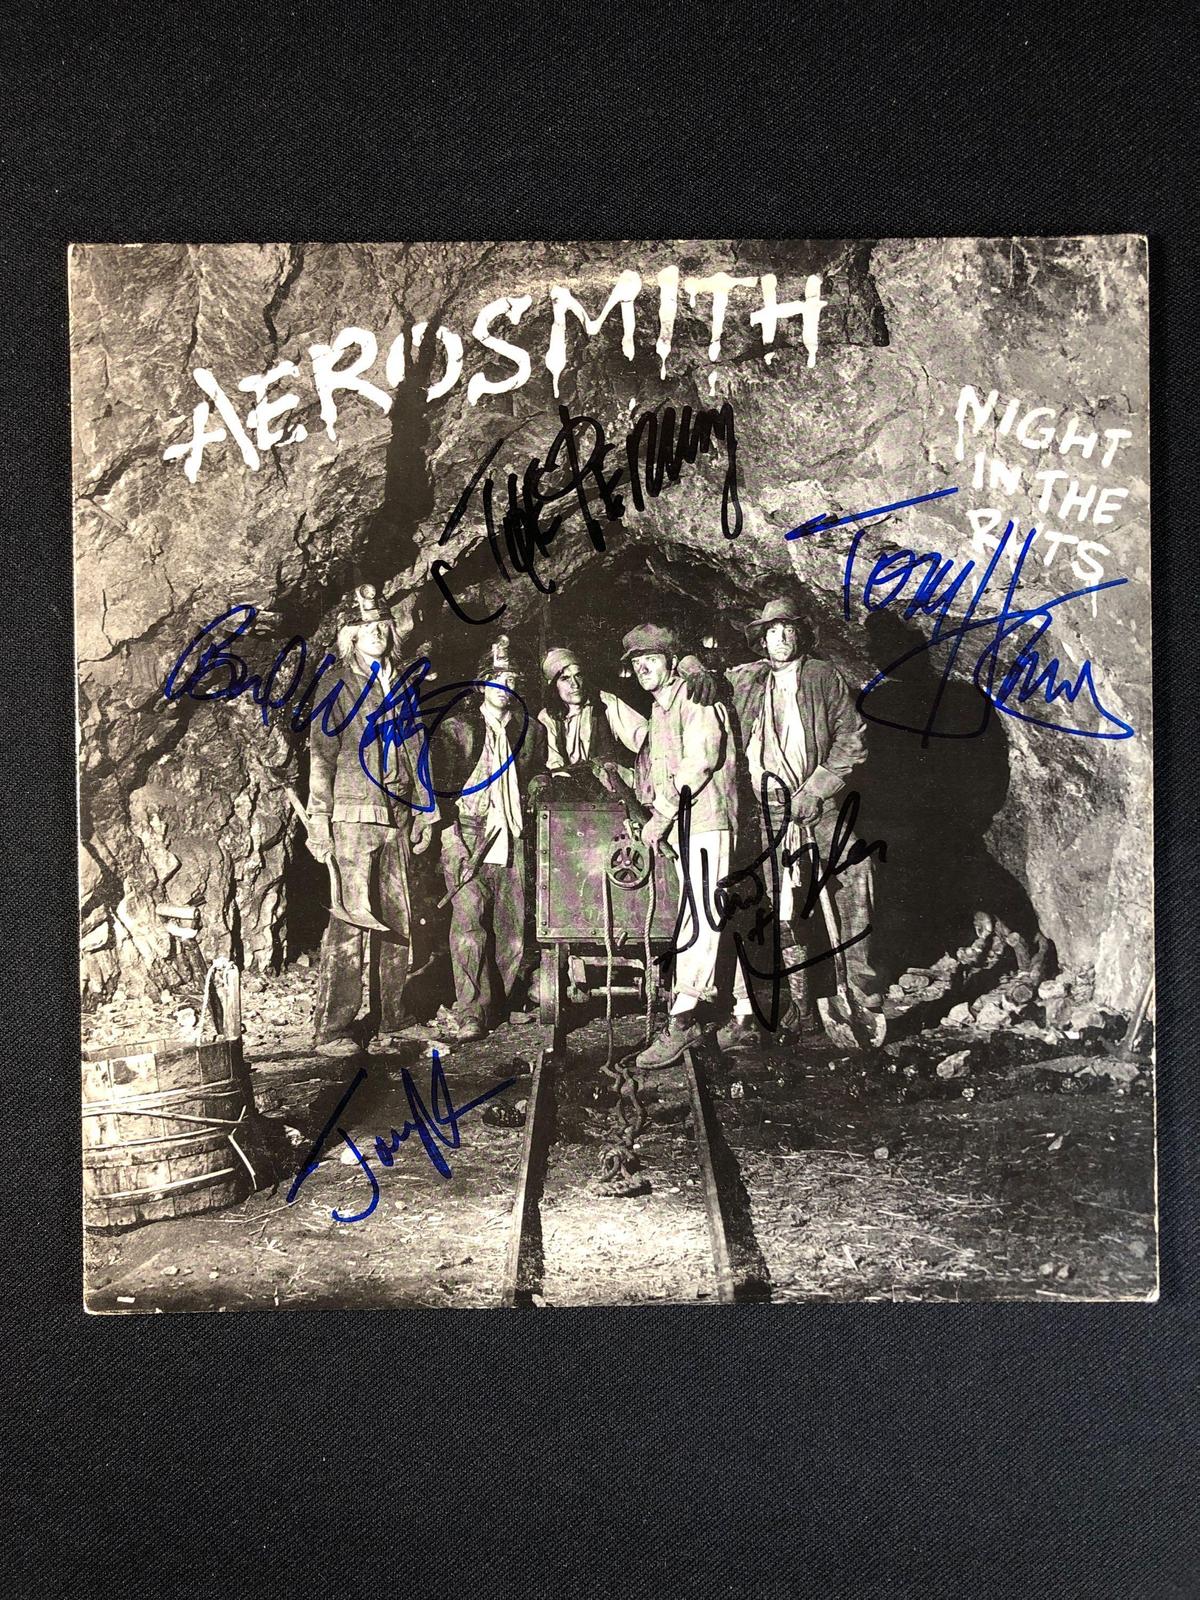 Aerosmith "Night In The Ruts" Autographed Album